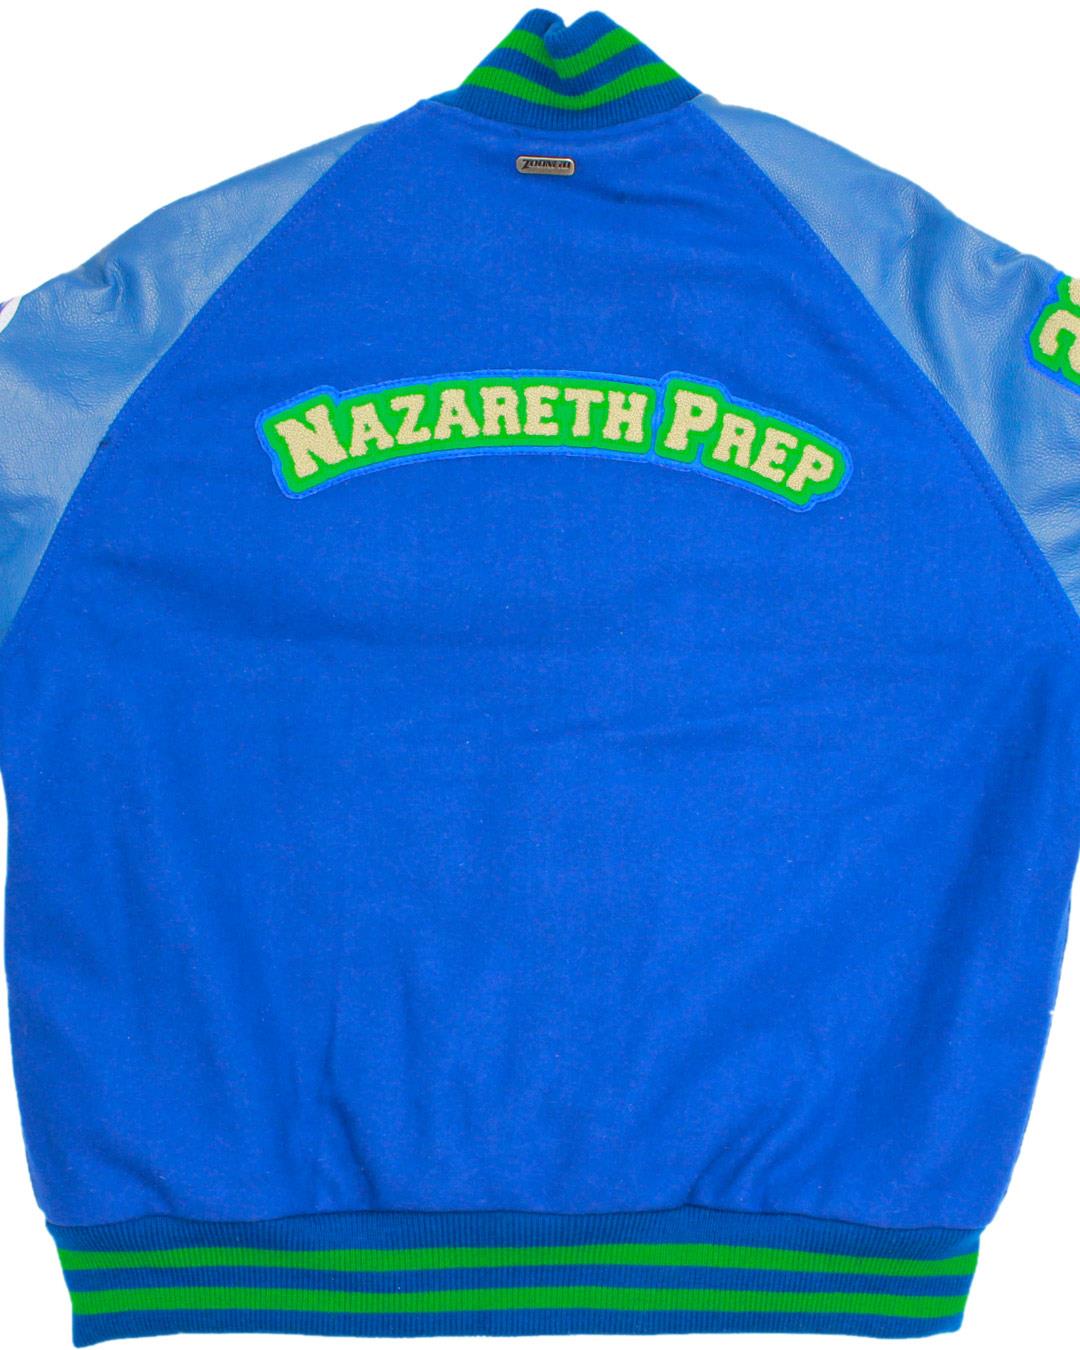 Nazareth Prep Saints Letterman Jacket, Pittsburgh, PA - Back